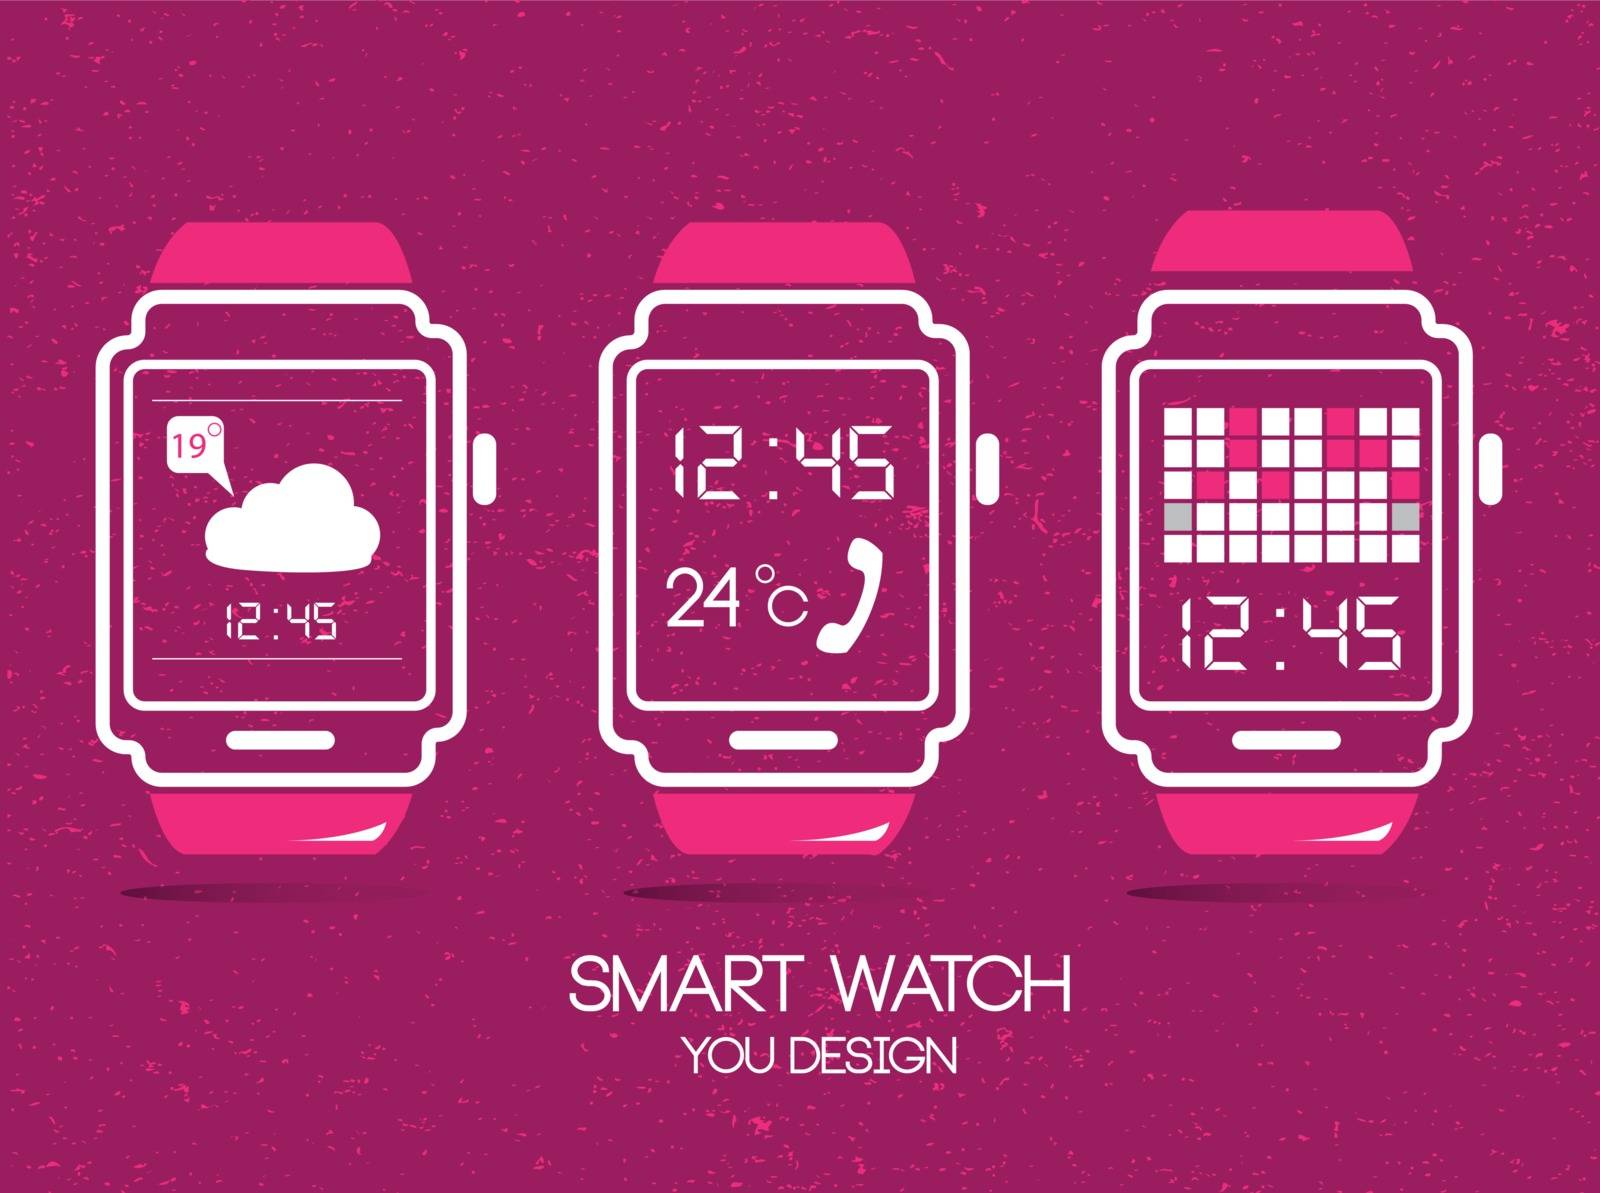 Smart watch concept by noppawan429